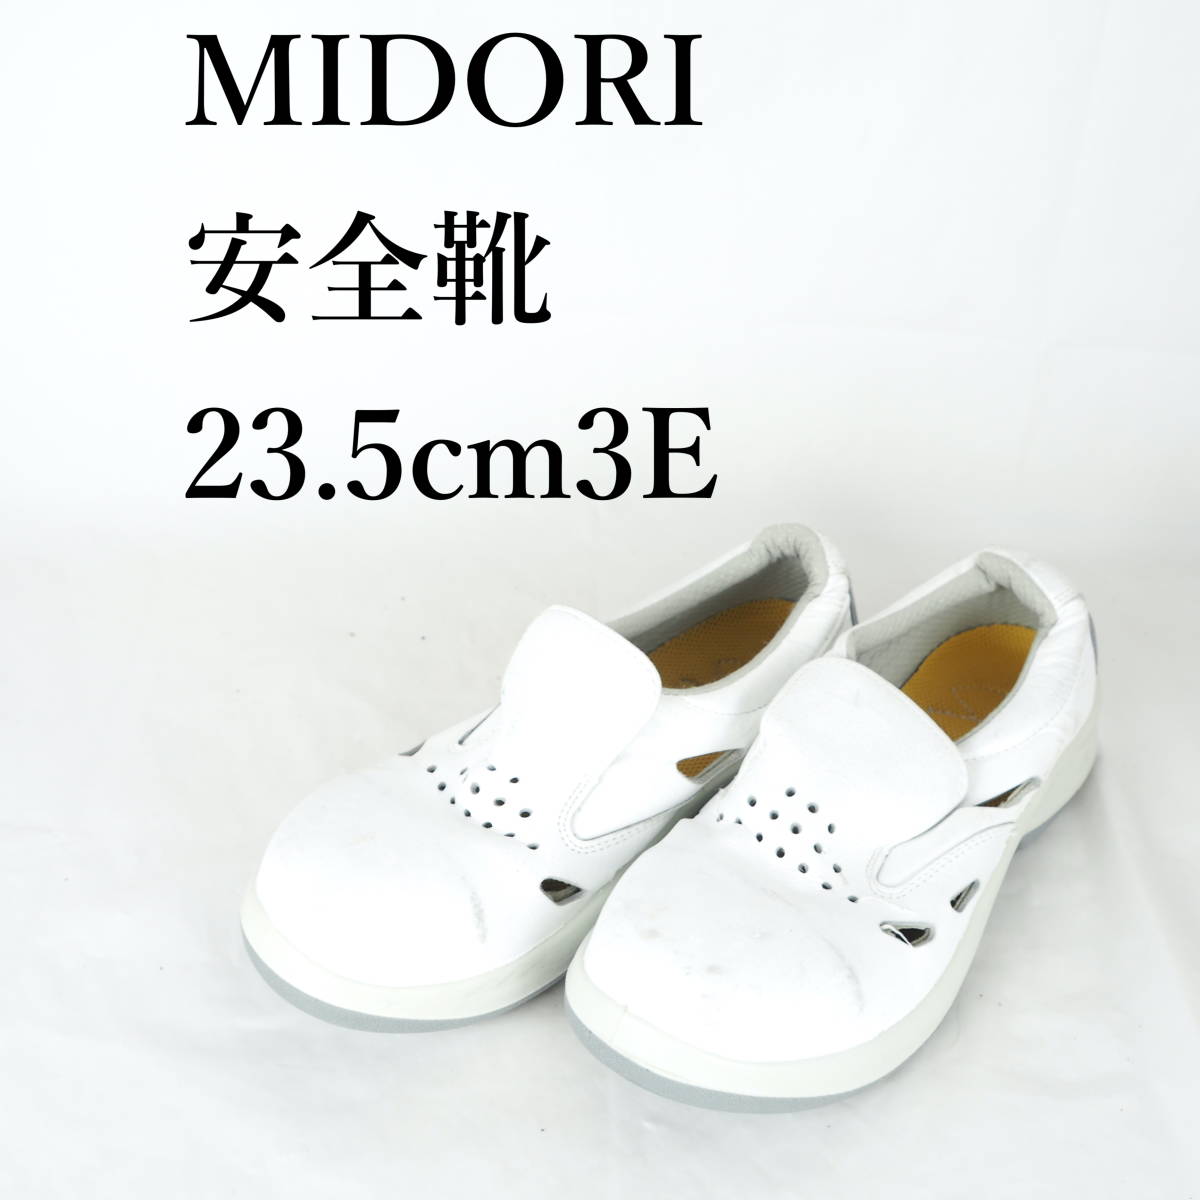 MK1695*MIDORI* safety shoes *23.5cm3E* white 